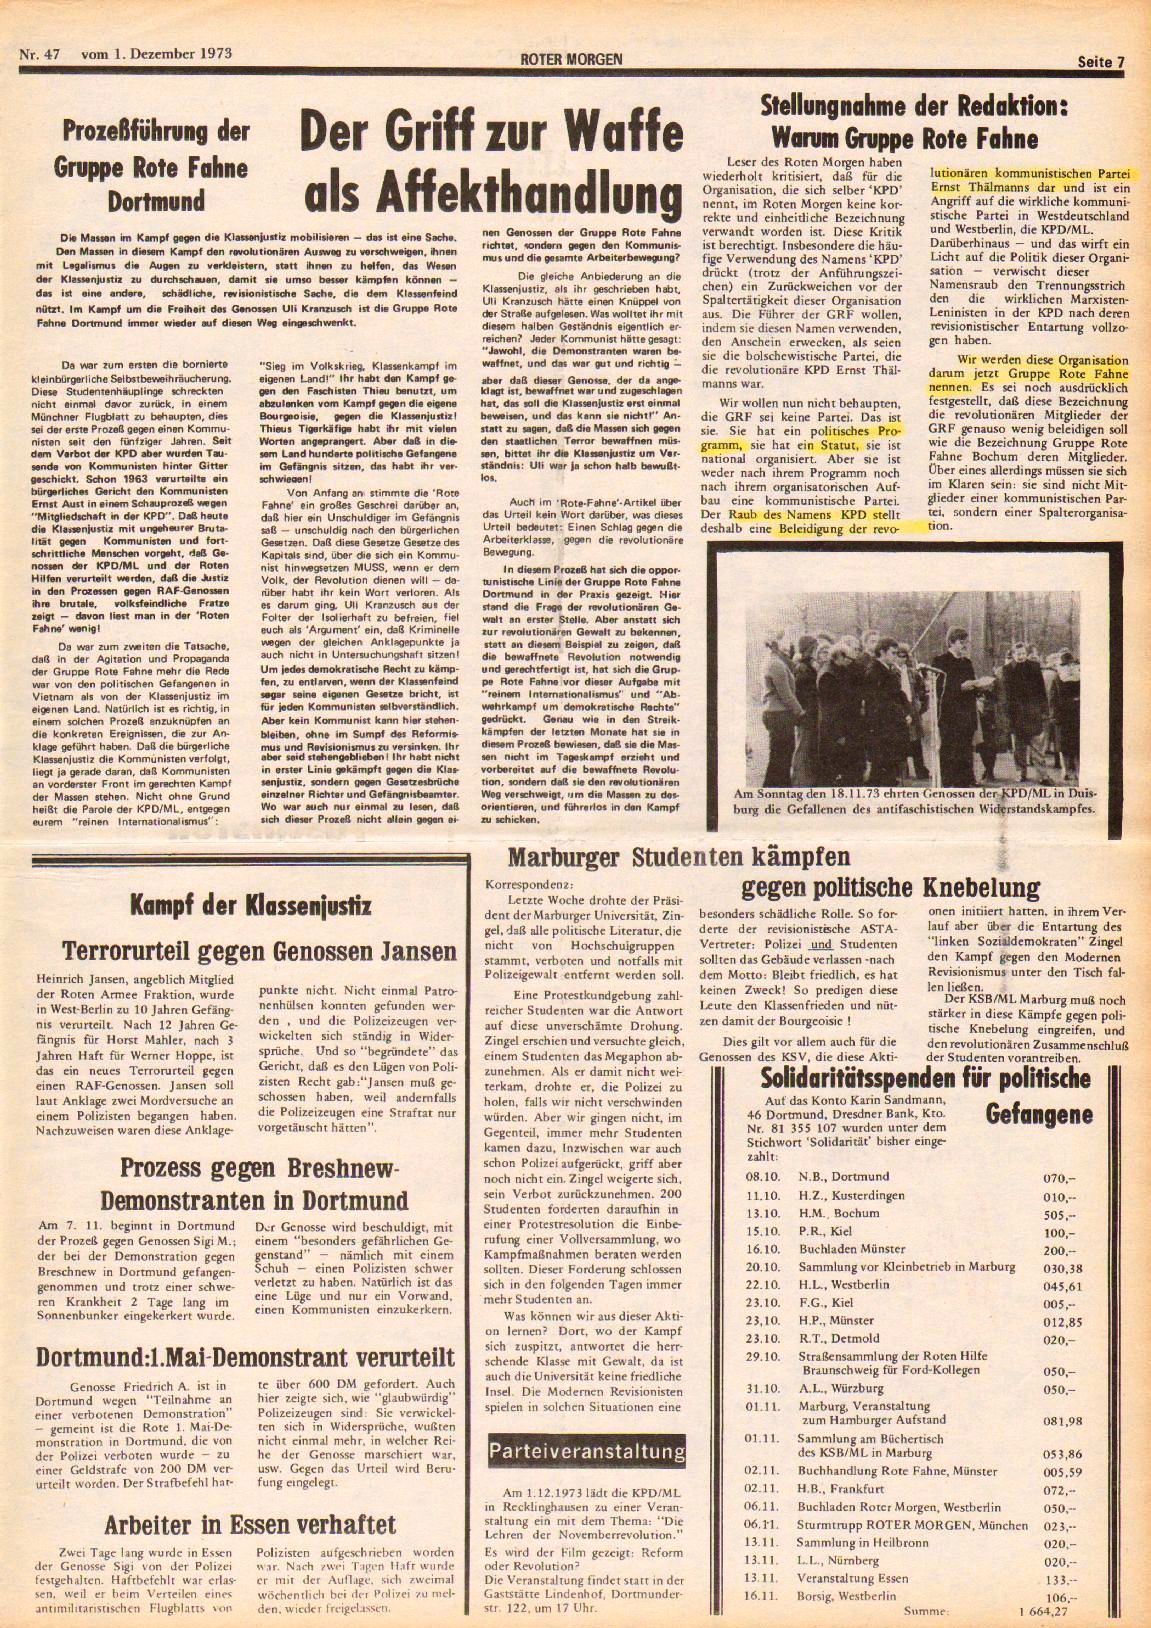 Roter Morgen, 7. Jg., 1. Dezember 1973, Nr. 47, Seite 7